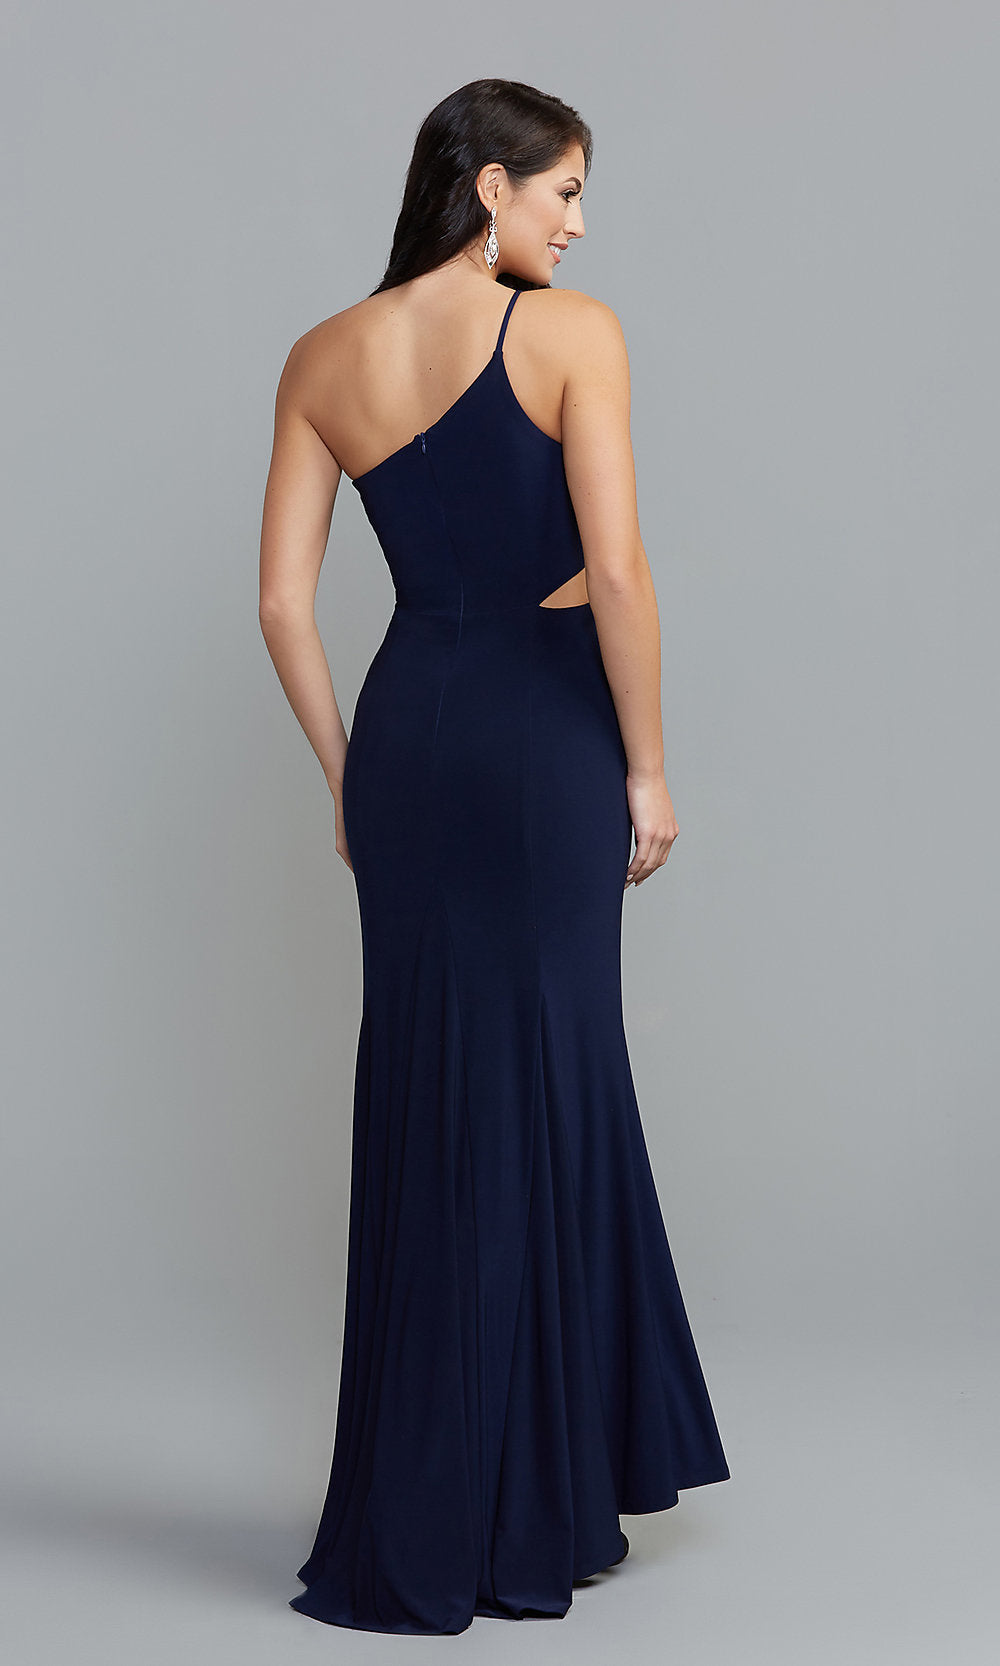  Jump One-Shoulder Navy Blue Long Prom Dress